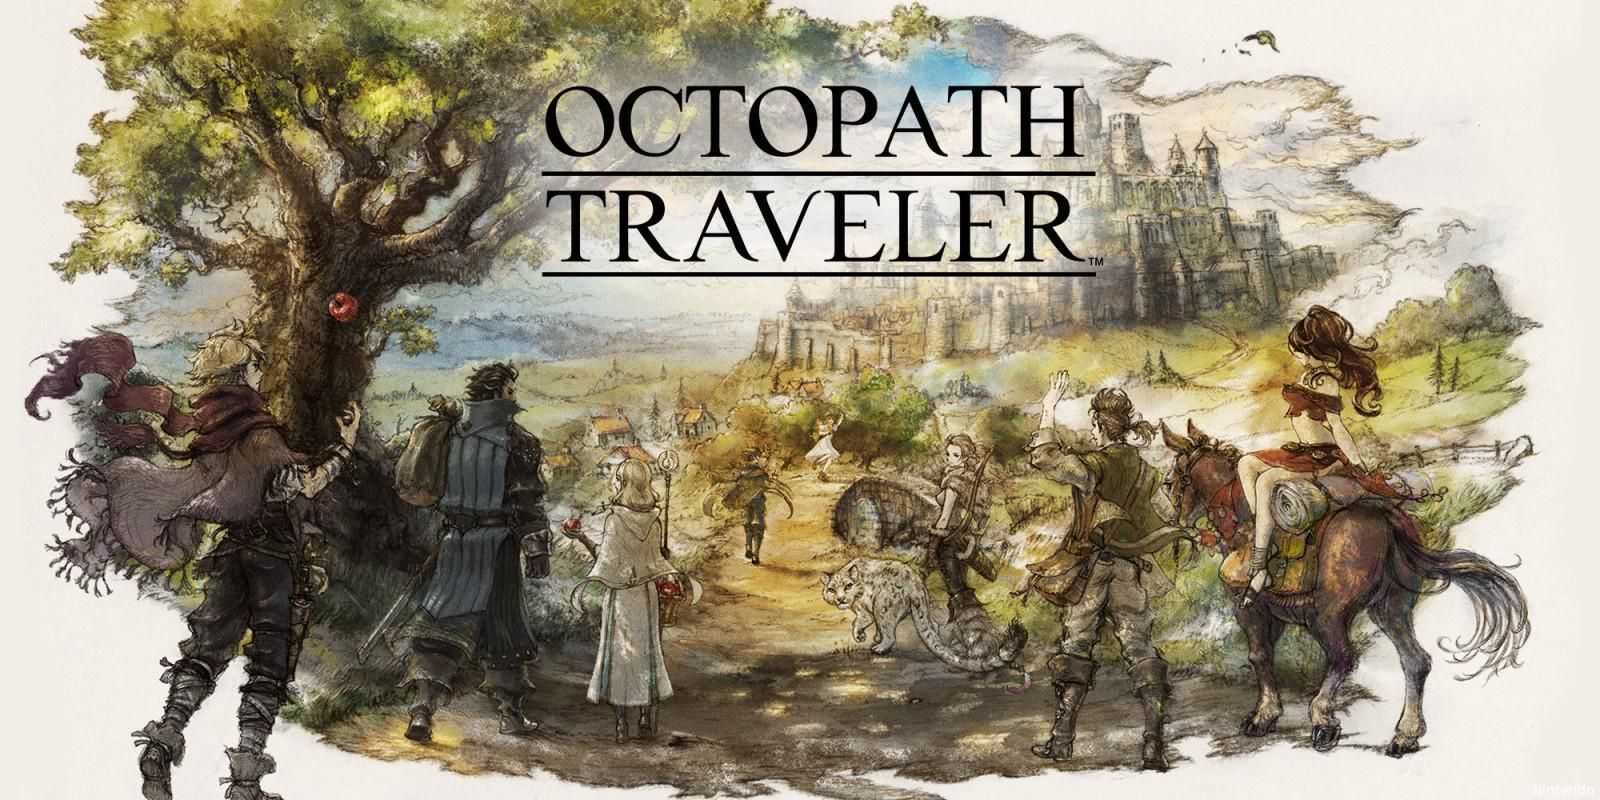 octopath traveler review reis vol keuzes 135740 1